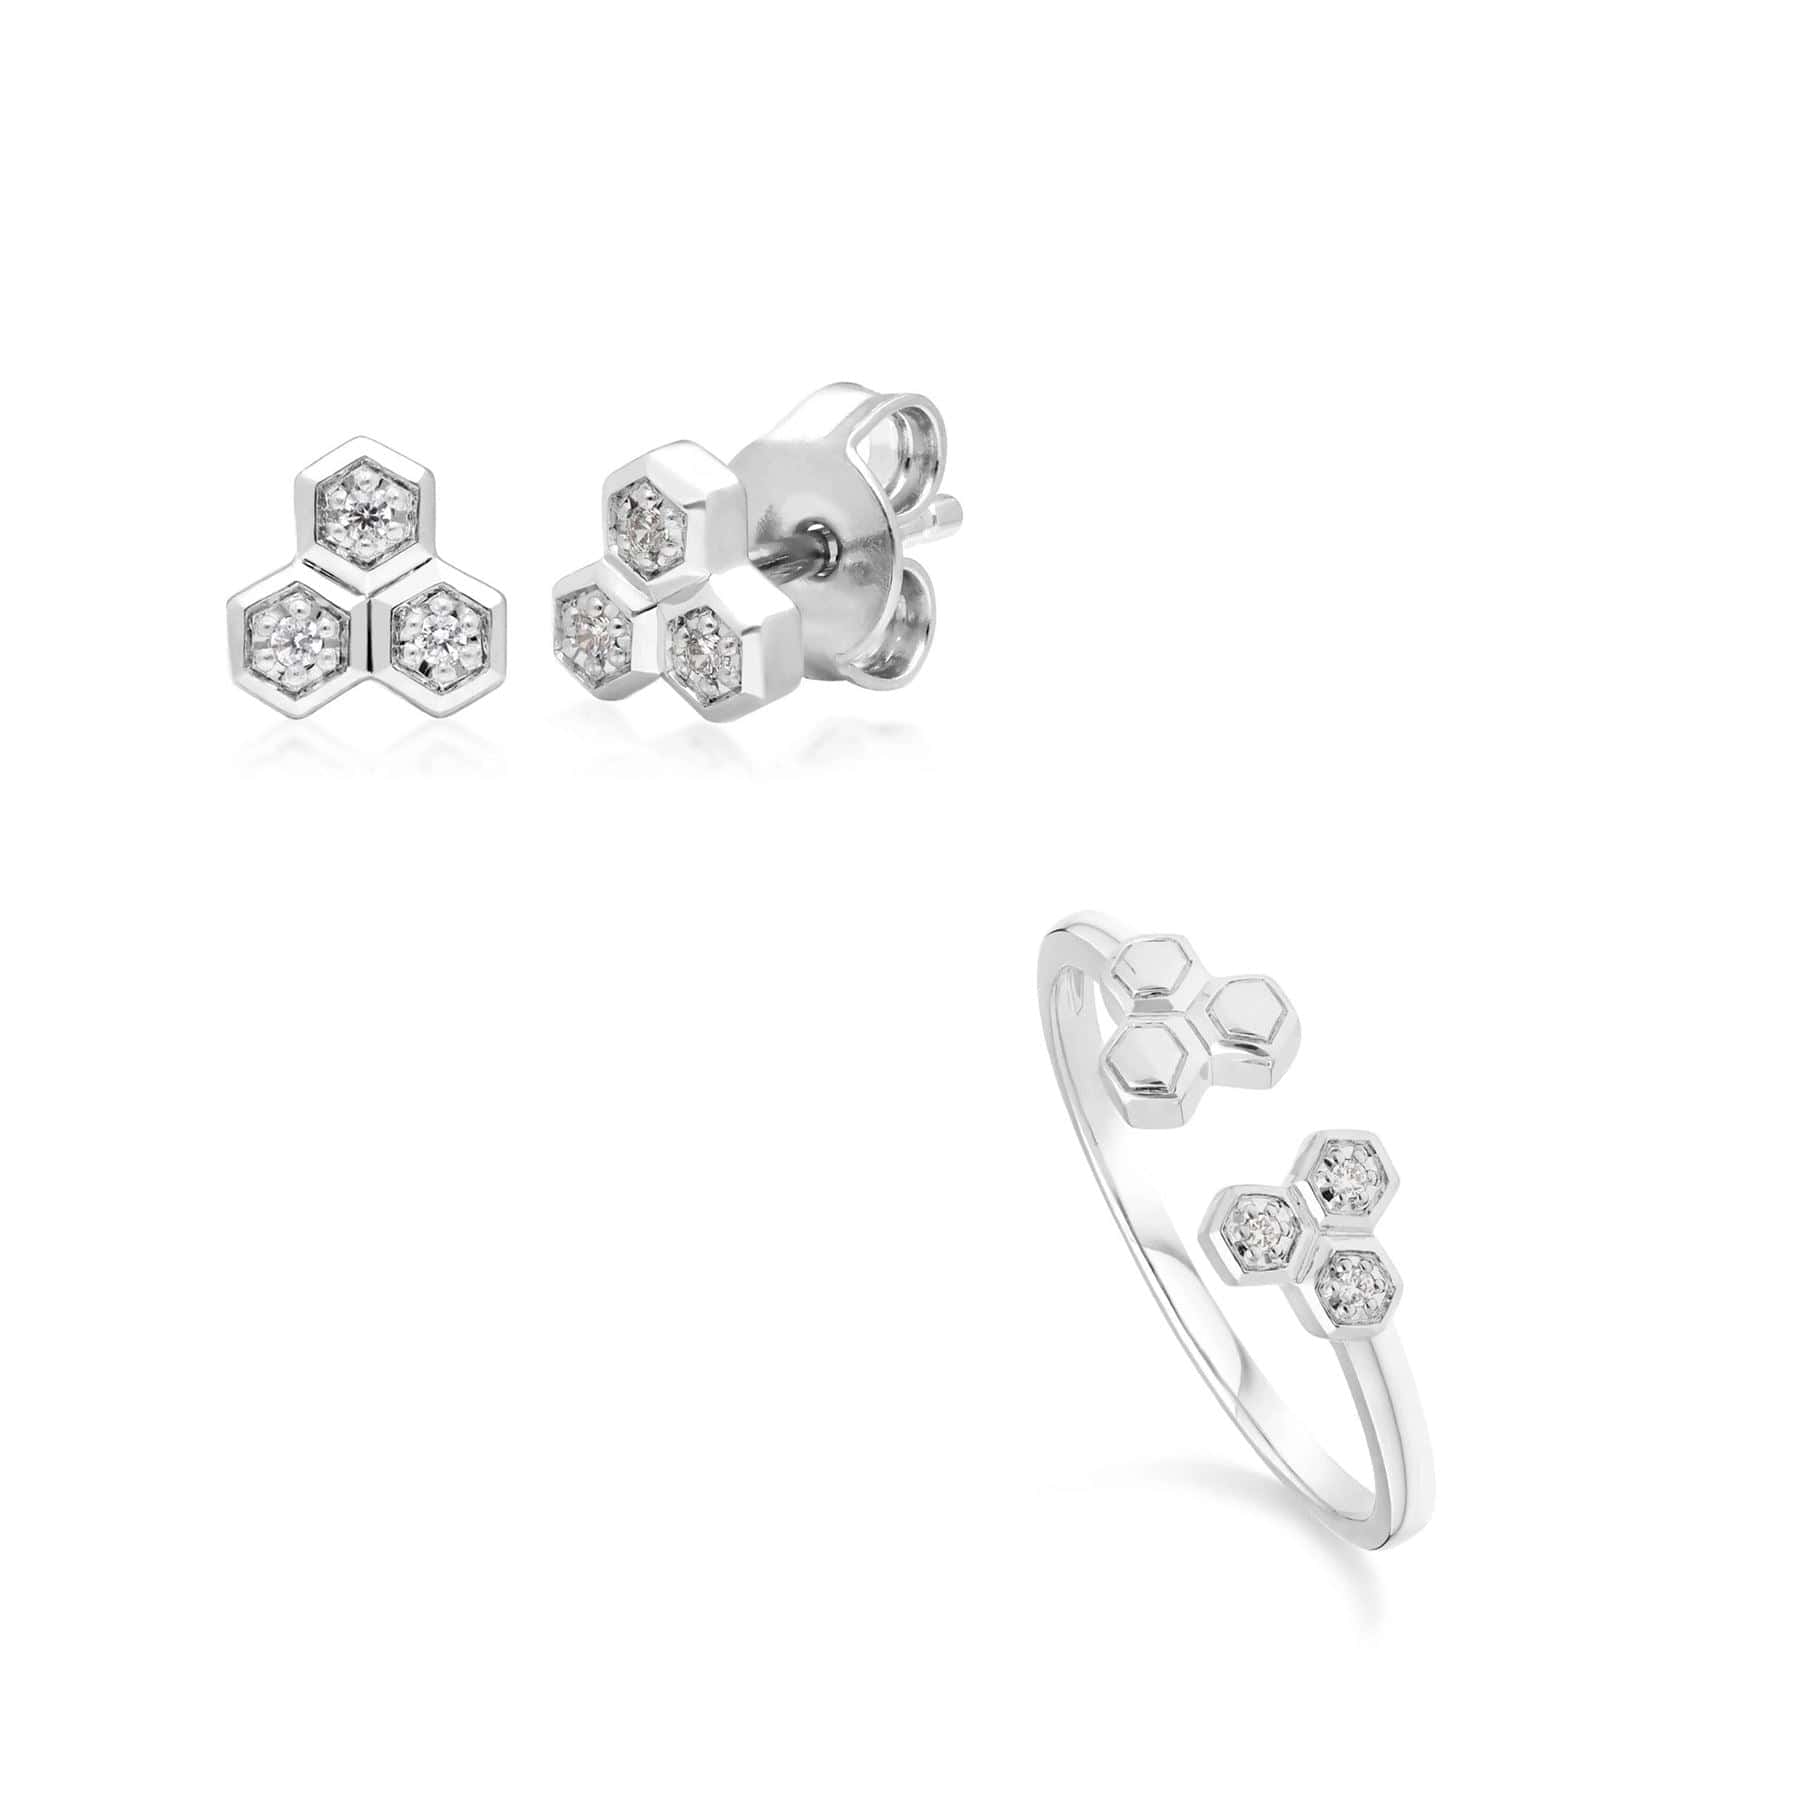 162E0272019-162R0393019 Diamond Trilogy Ring & Stud Earring Set in 9ct White Gold 1